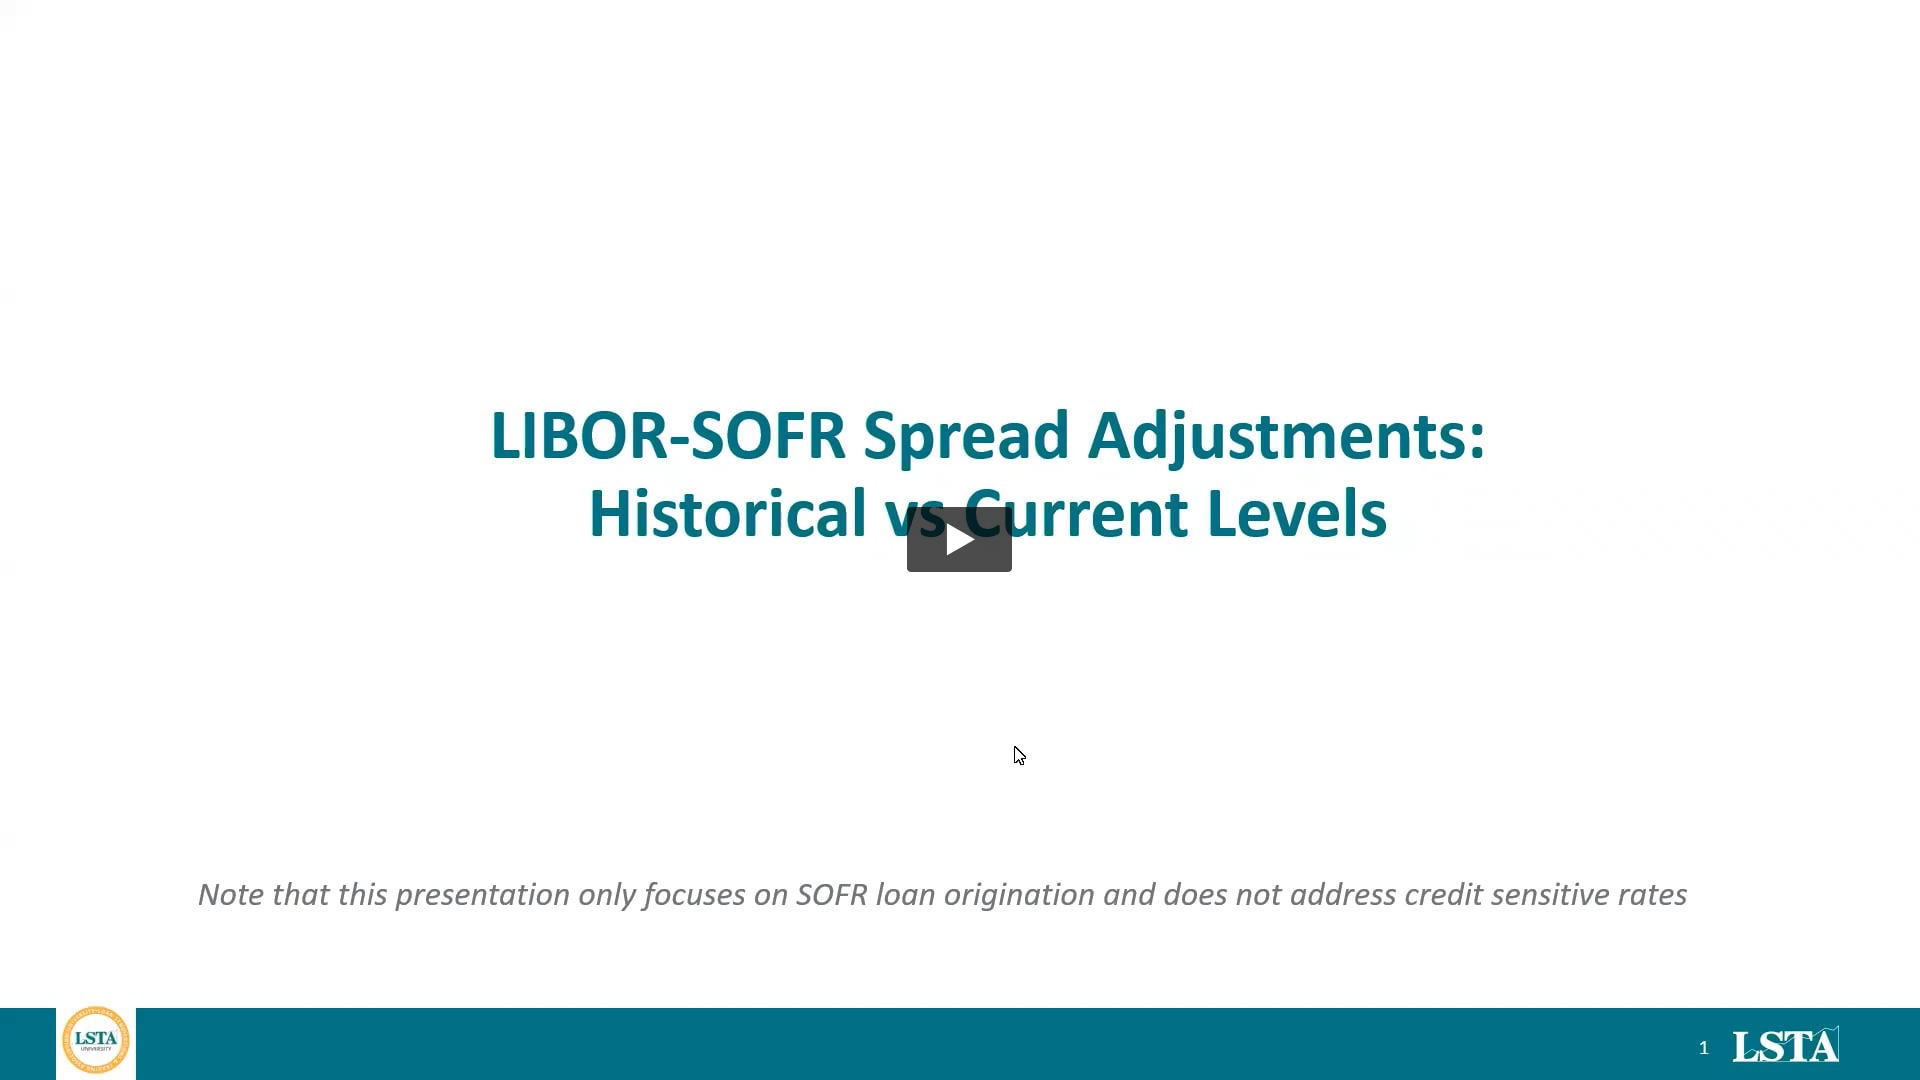 LIBOR-SOFR Spread Adjustments: Historical vs Current Levels Podcasts